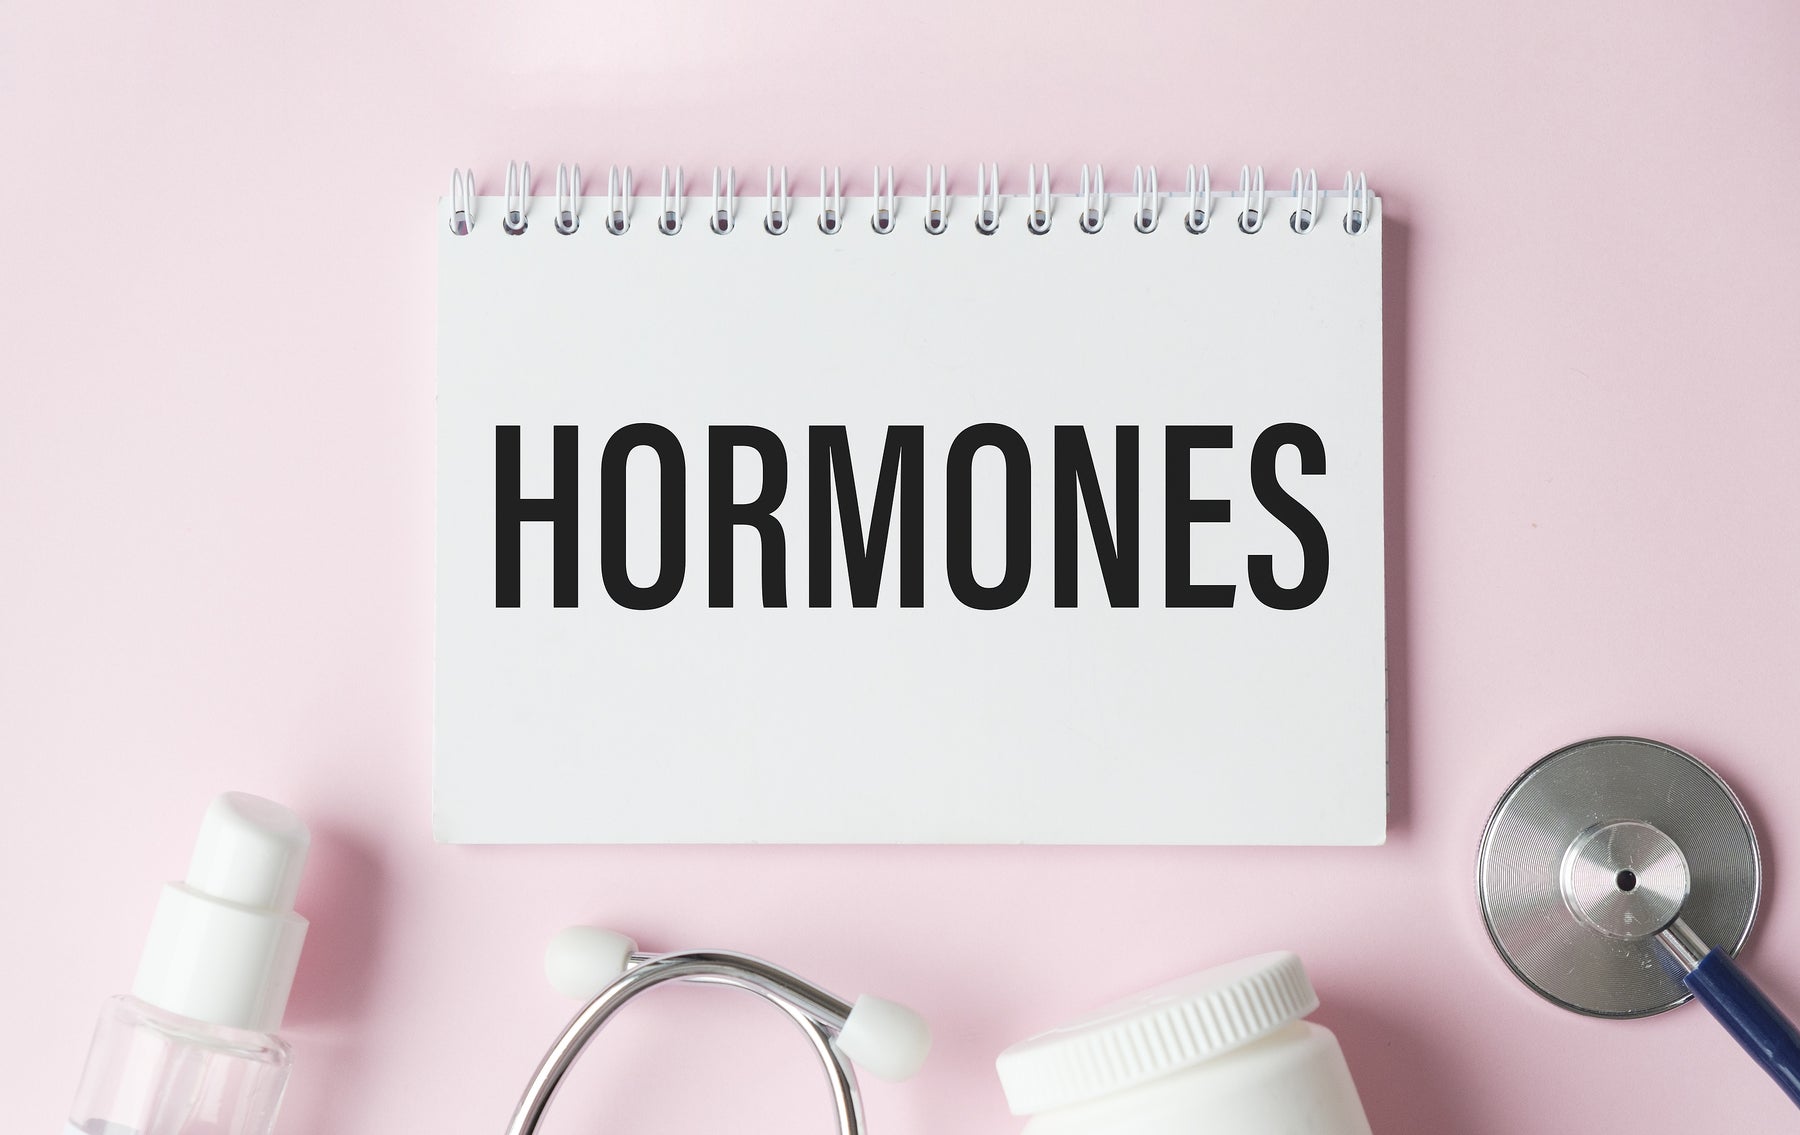 Mid-Life Women's Hormonal Balance